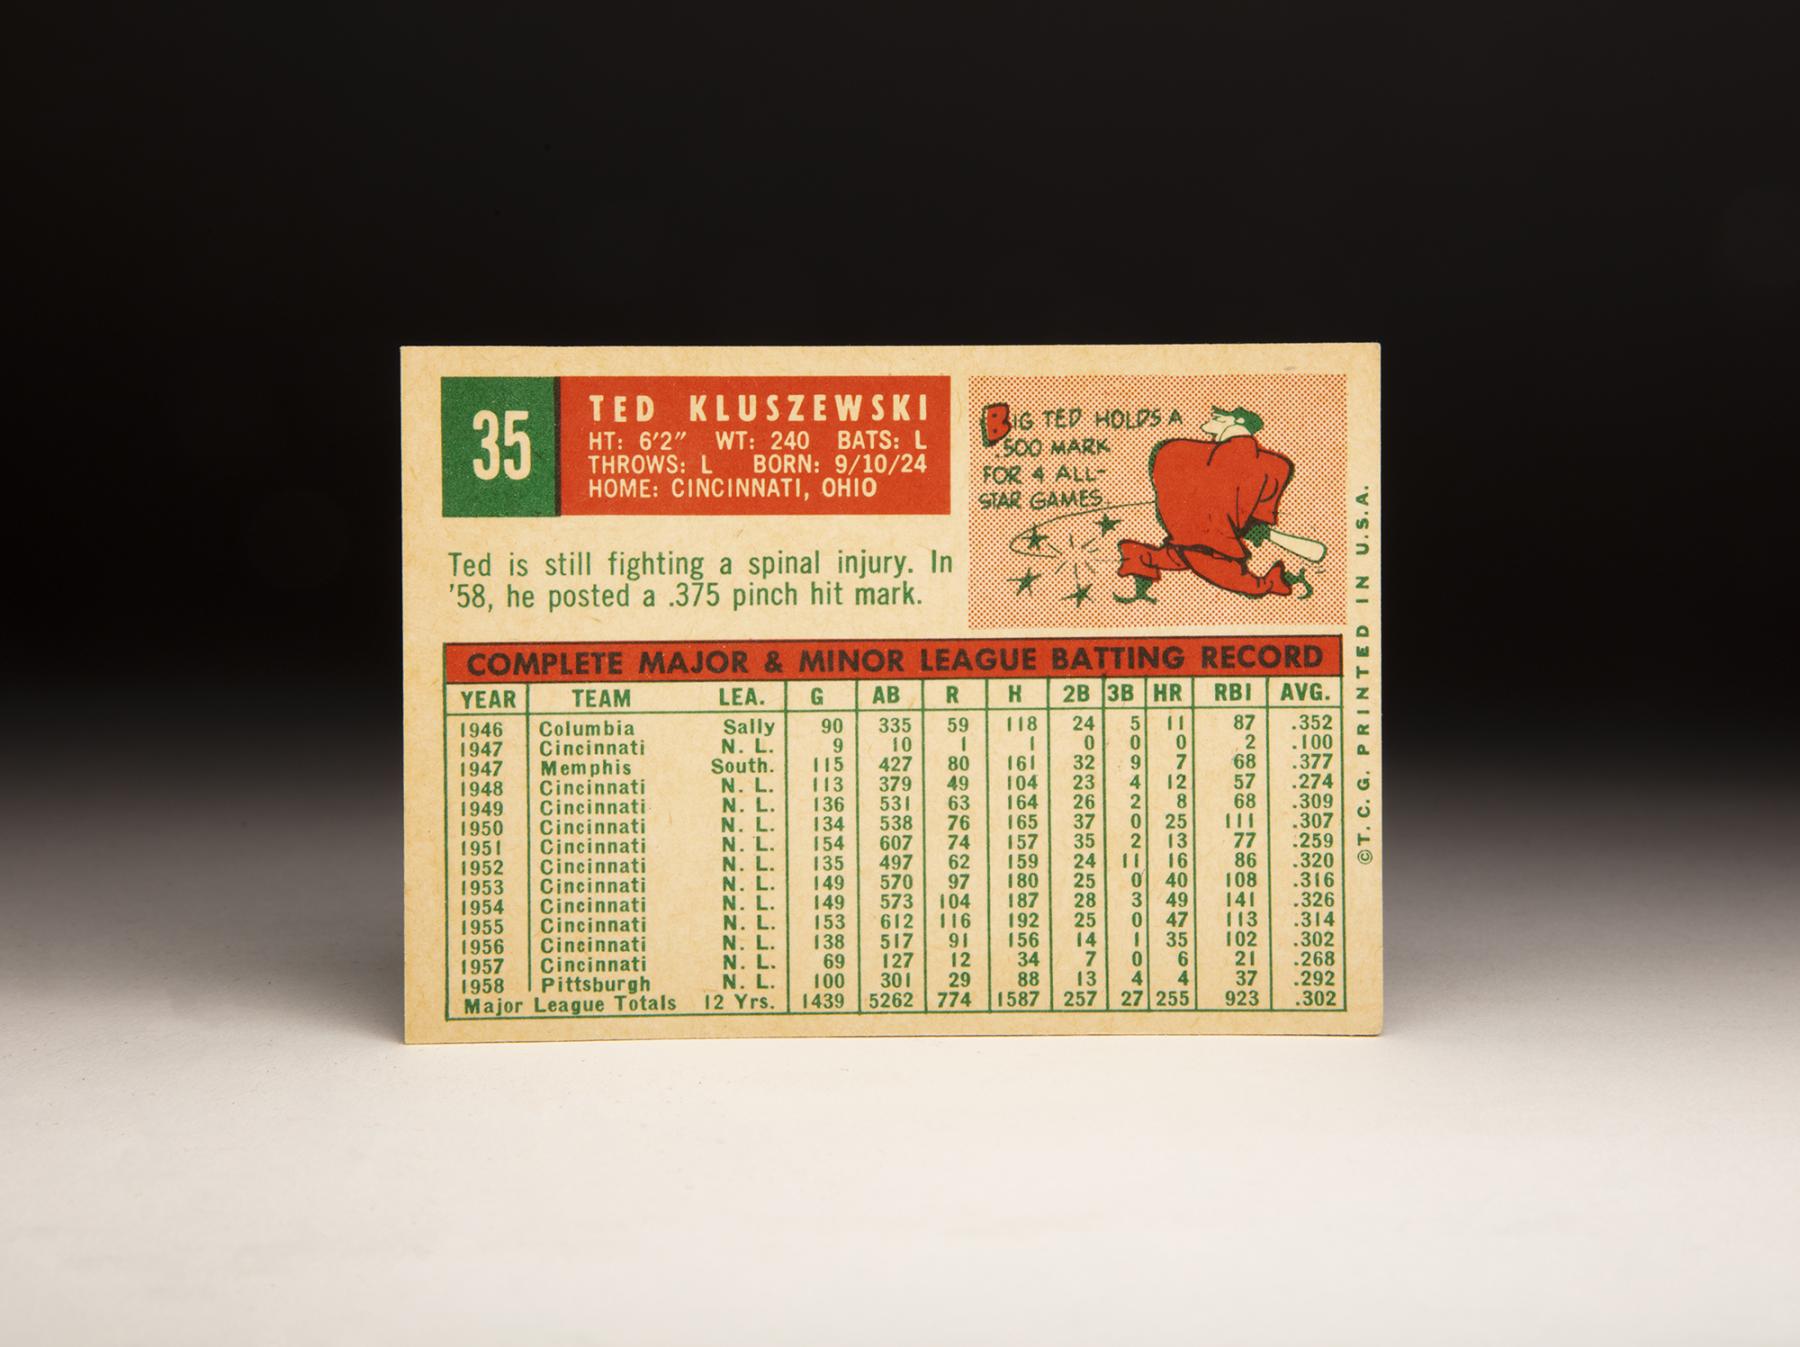 1954 Topps #7 Ted Kluszewski Cincinnati Reds Baseball Card Ex/Mt o